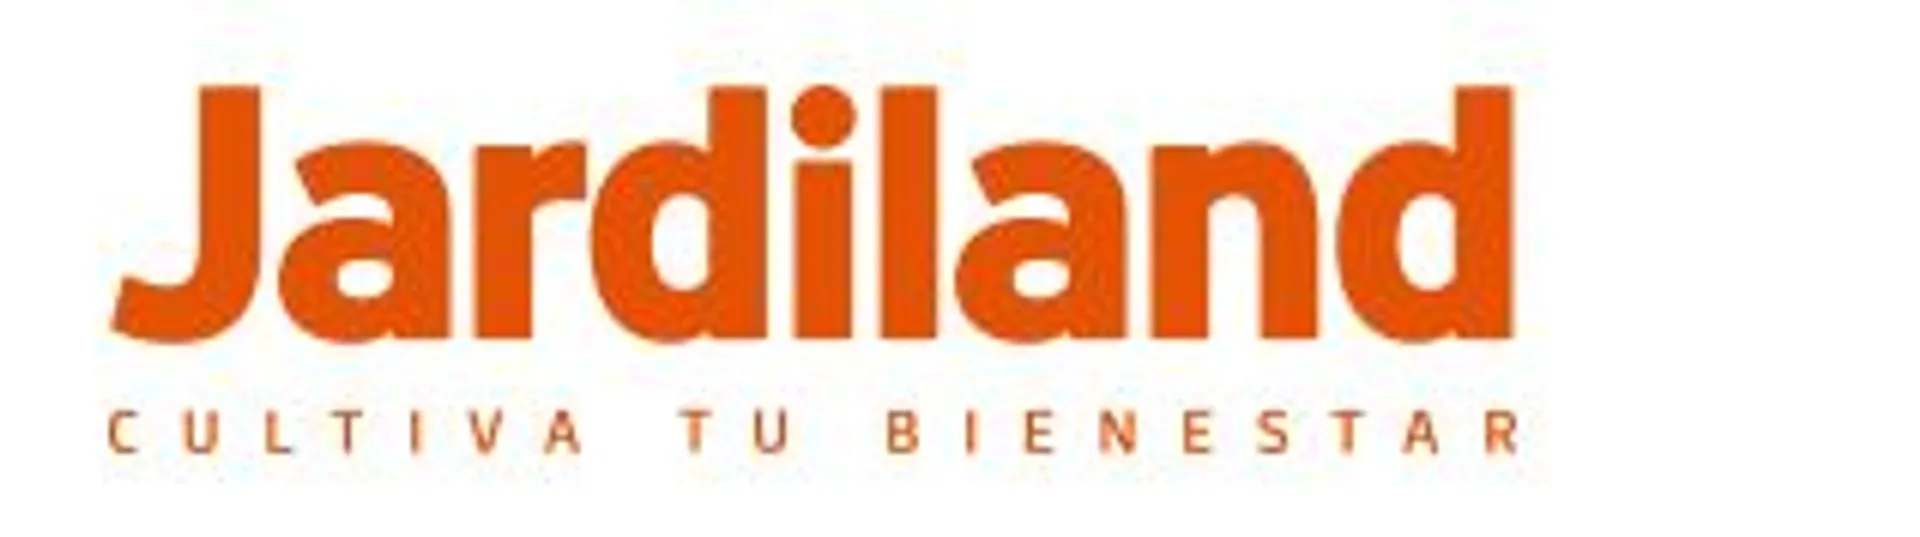 JARDILAND logo